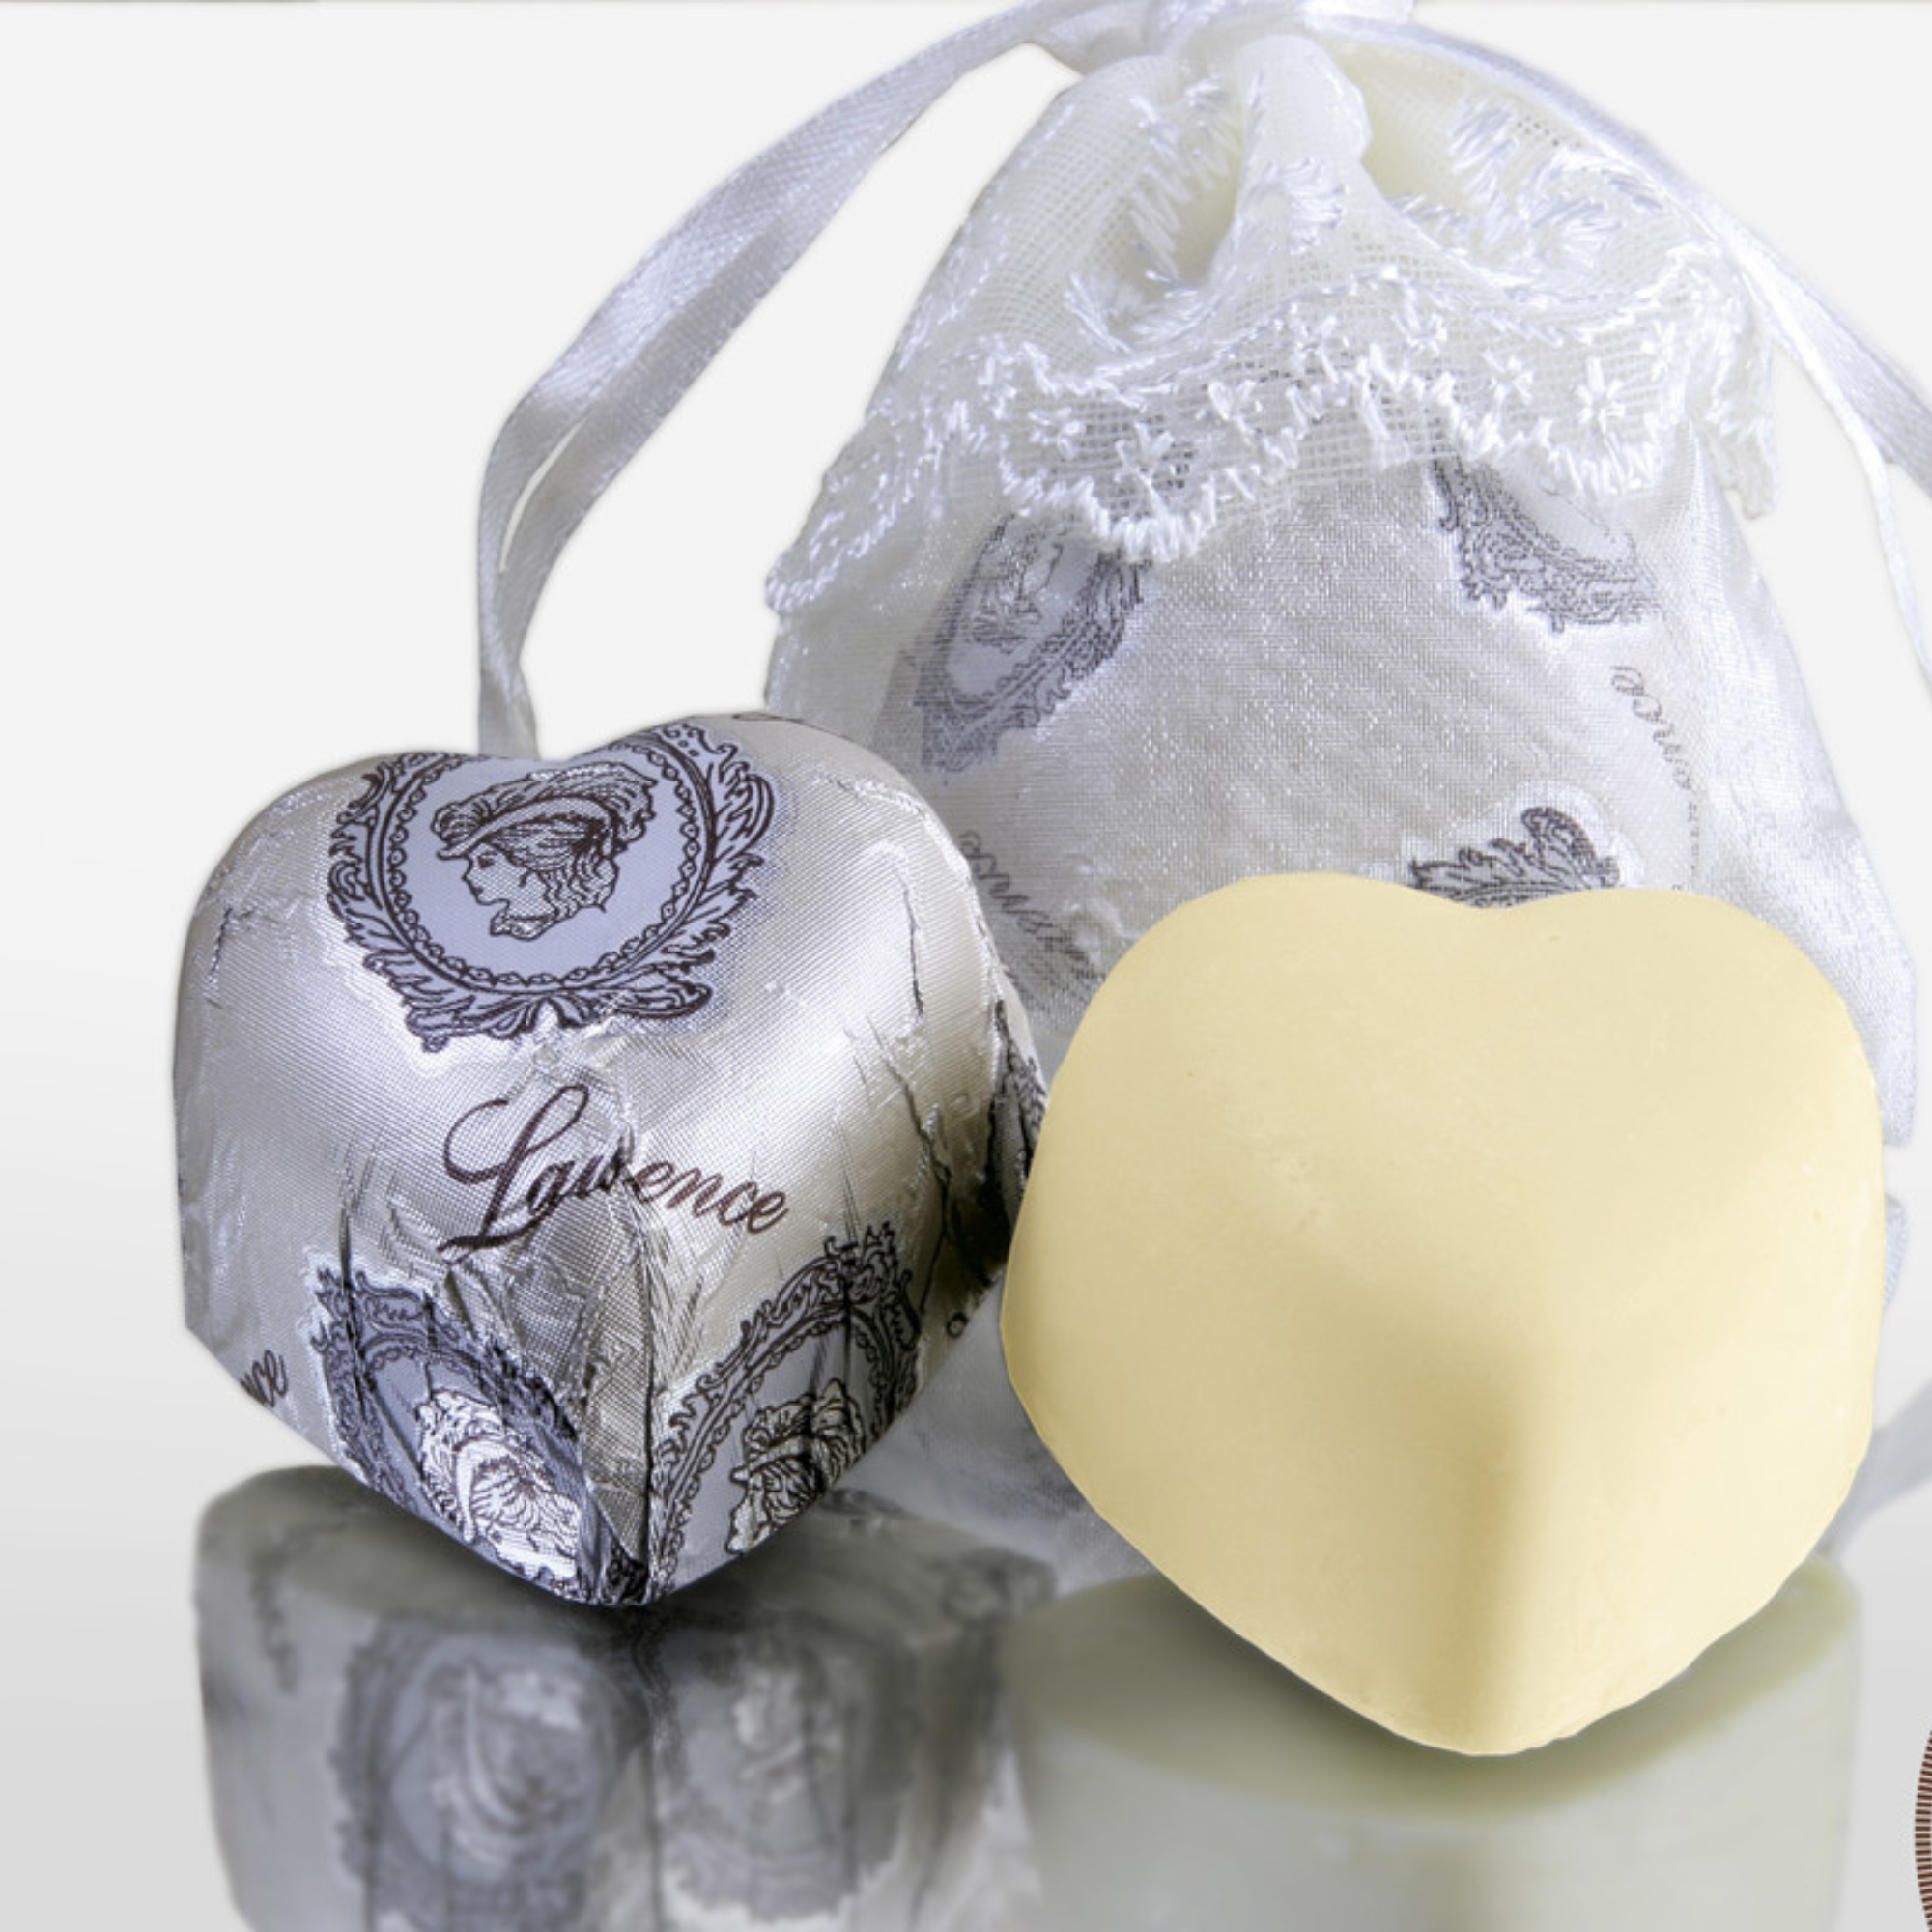 Цукерки з білого шоколаду з горіховою начинкою/Laurence White heart with Praline, 3 шт (≈110 г)